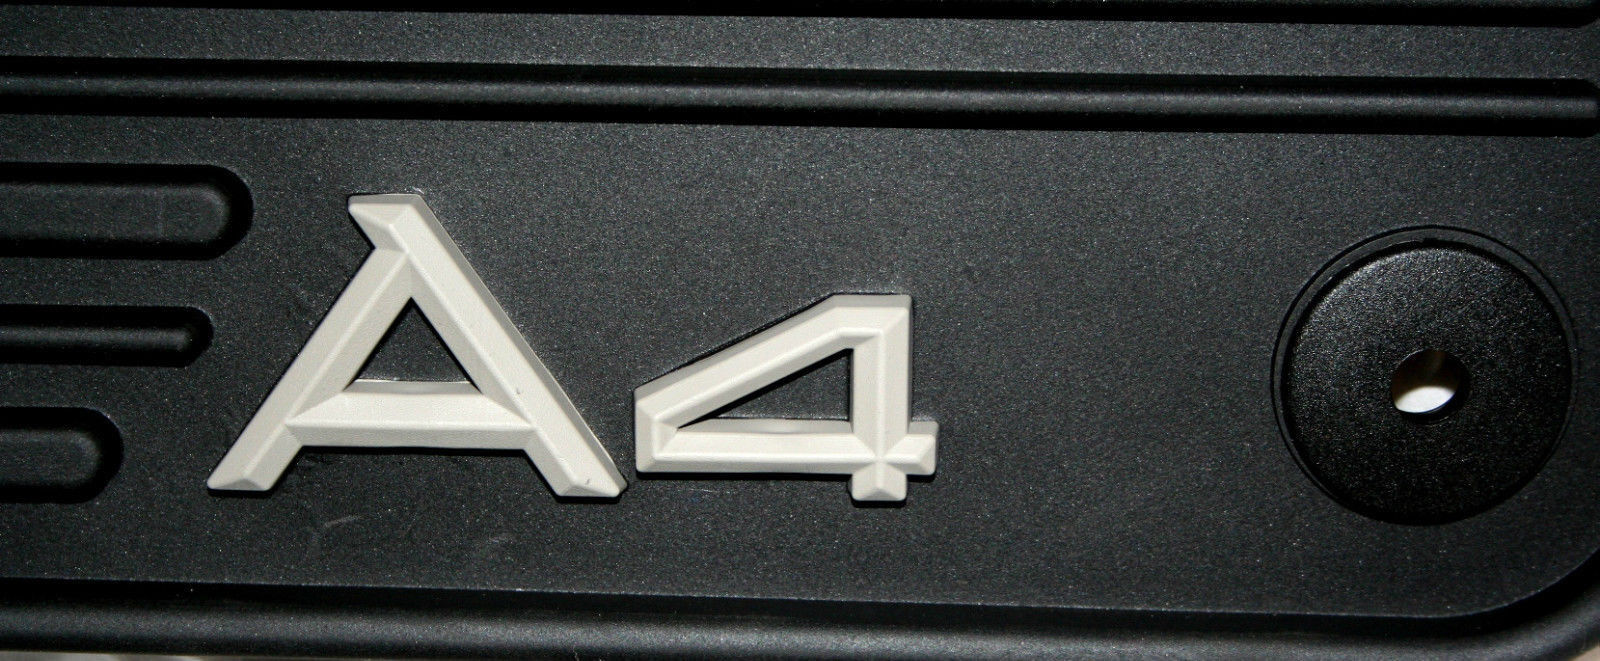 2003 TO 2008 Audi A4 Sedan/Wagon Factory Accessory Rubber Floor Mats - Set of 4